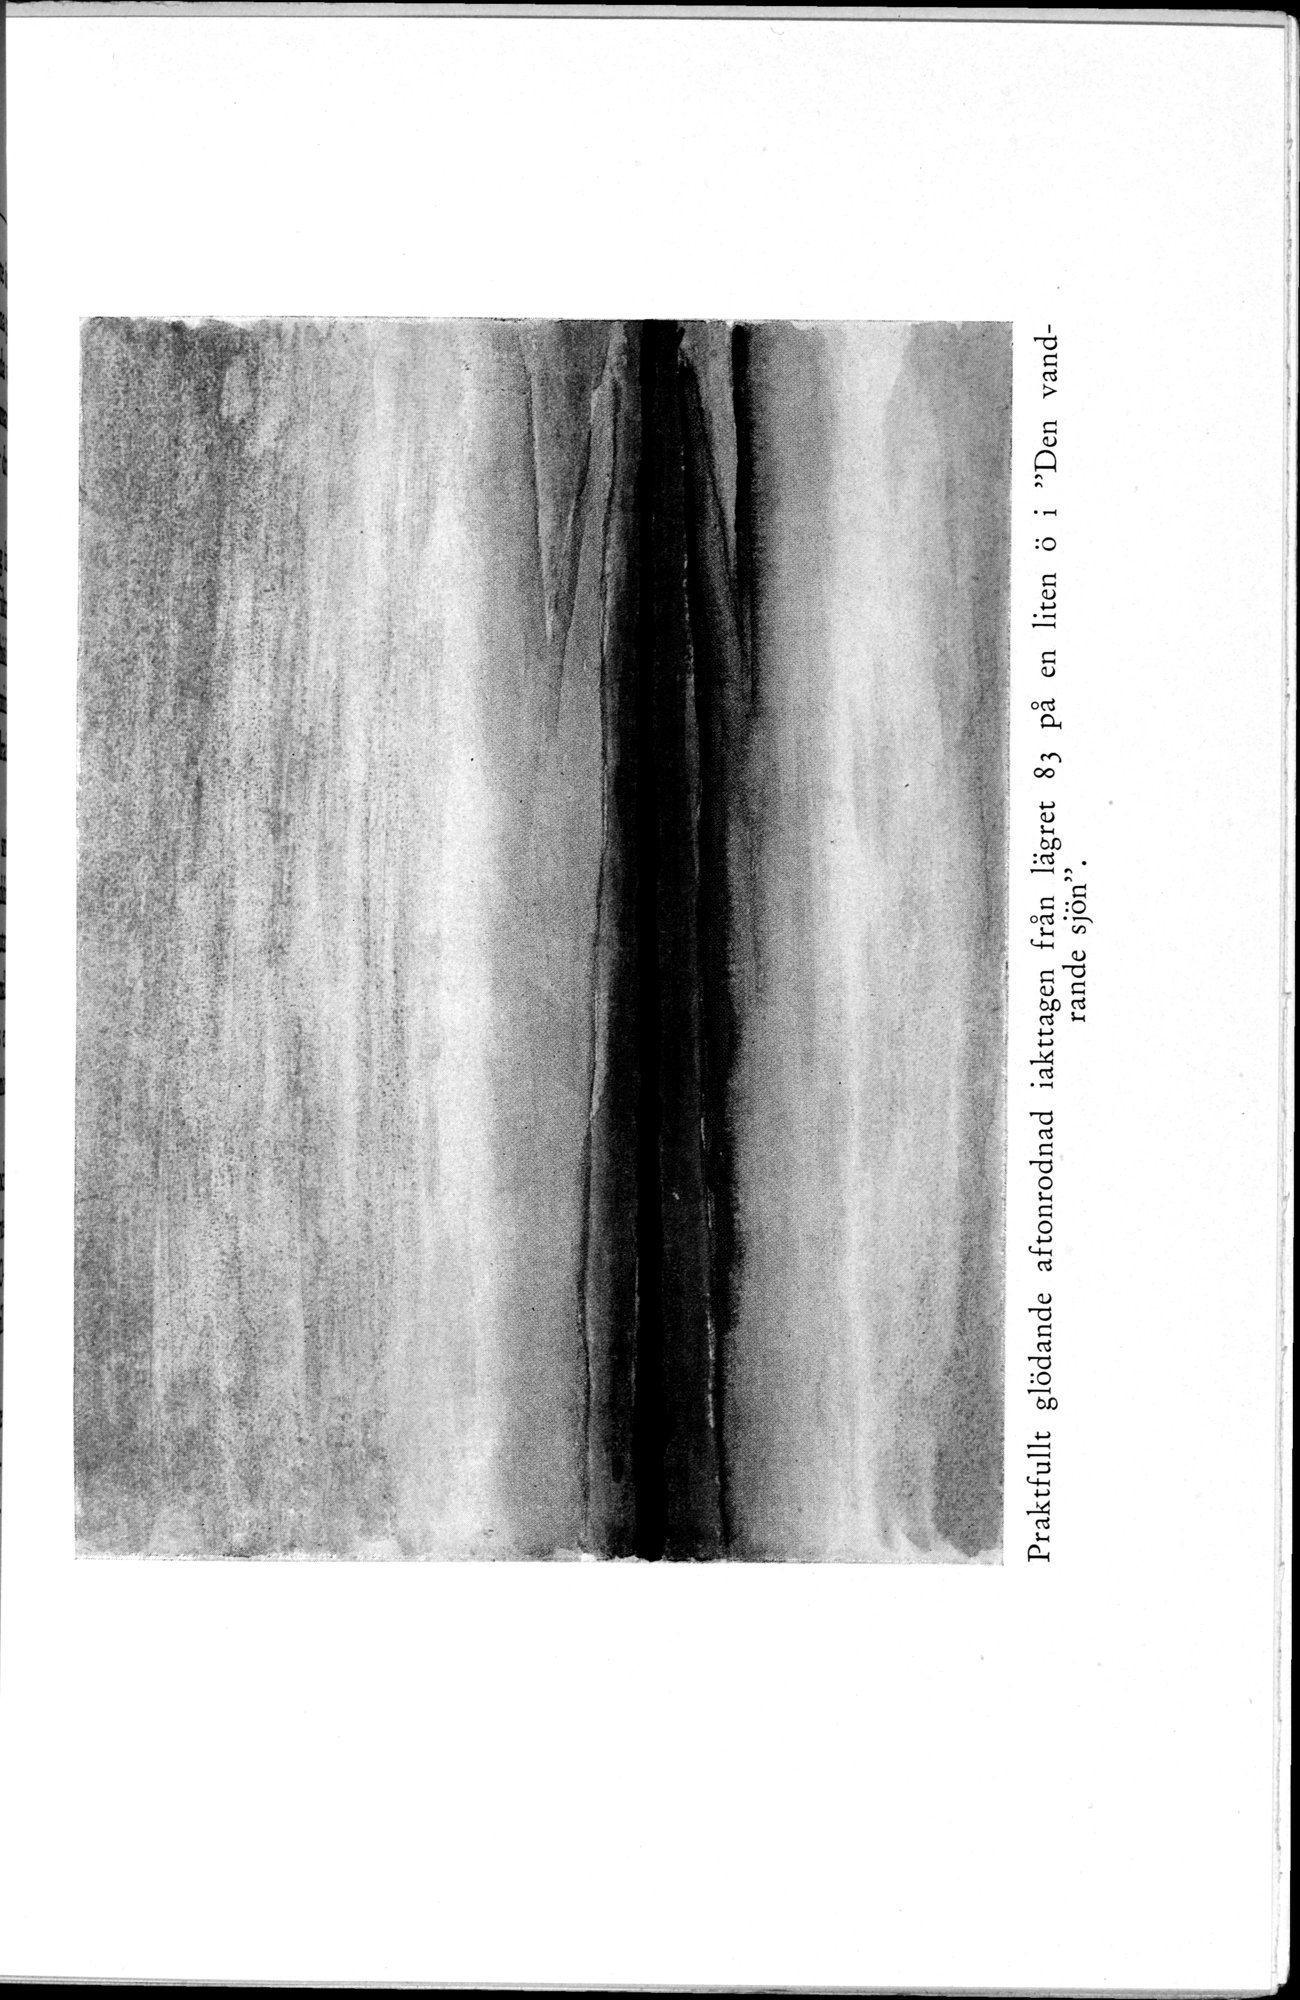 Den Vandrande Sjön : vol.1 / Page 205 (Grayscale High Resolution Image)